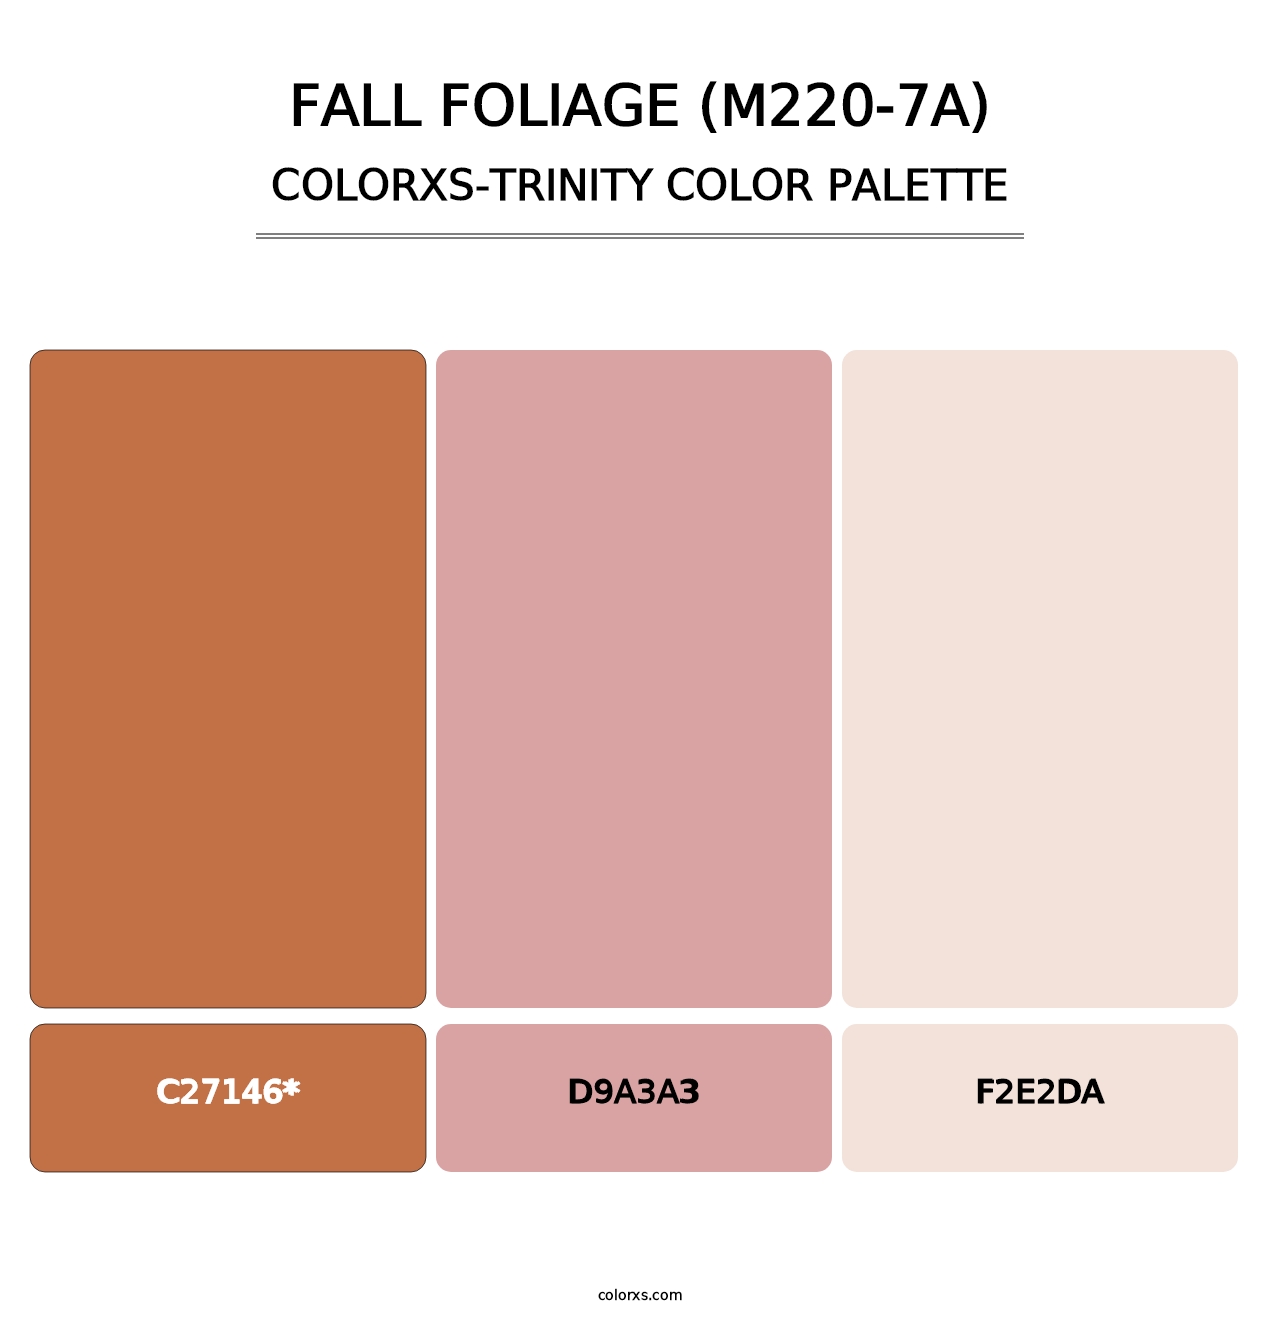 Fall Foliage (M220-7A) - Colorxs Trinity Palette